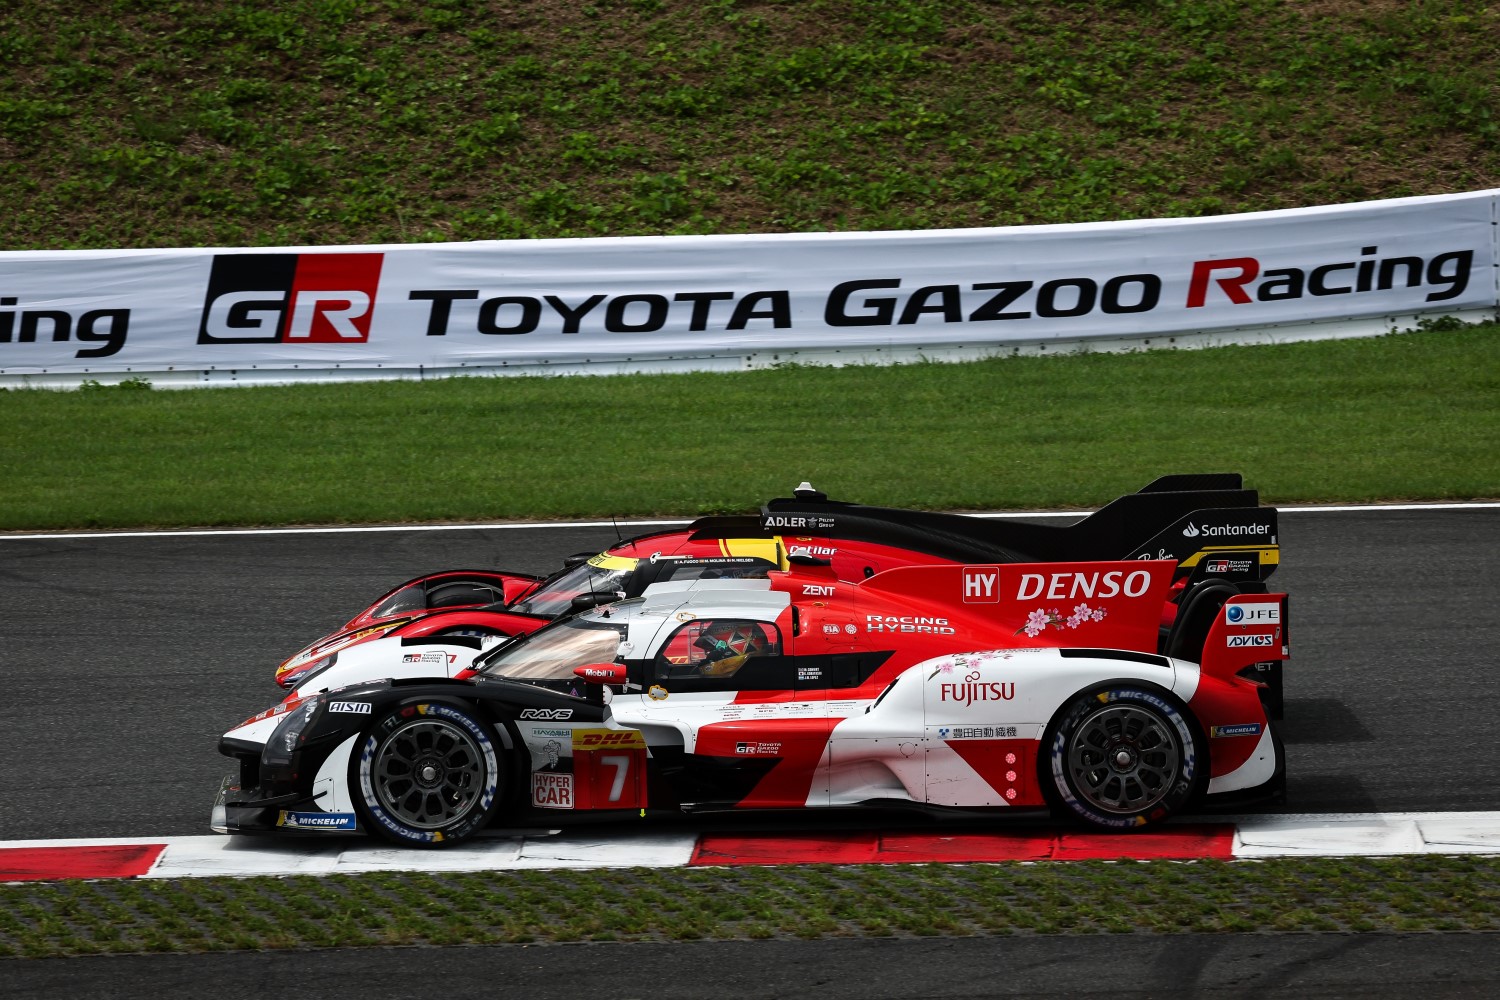 #7 Toyota battles hard with Ferrari